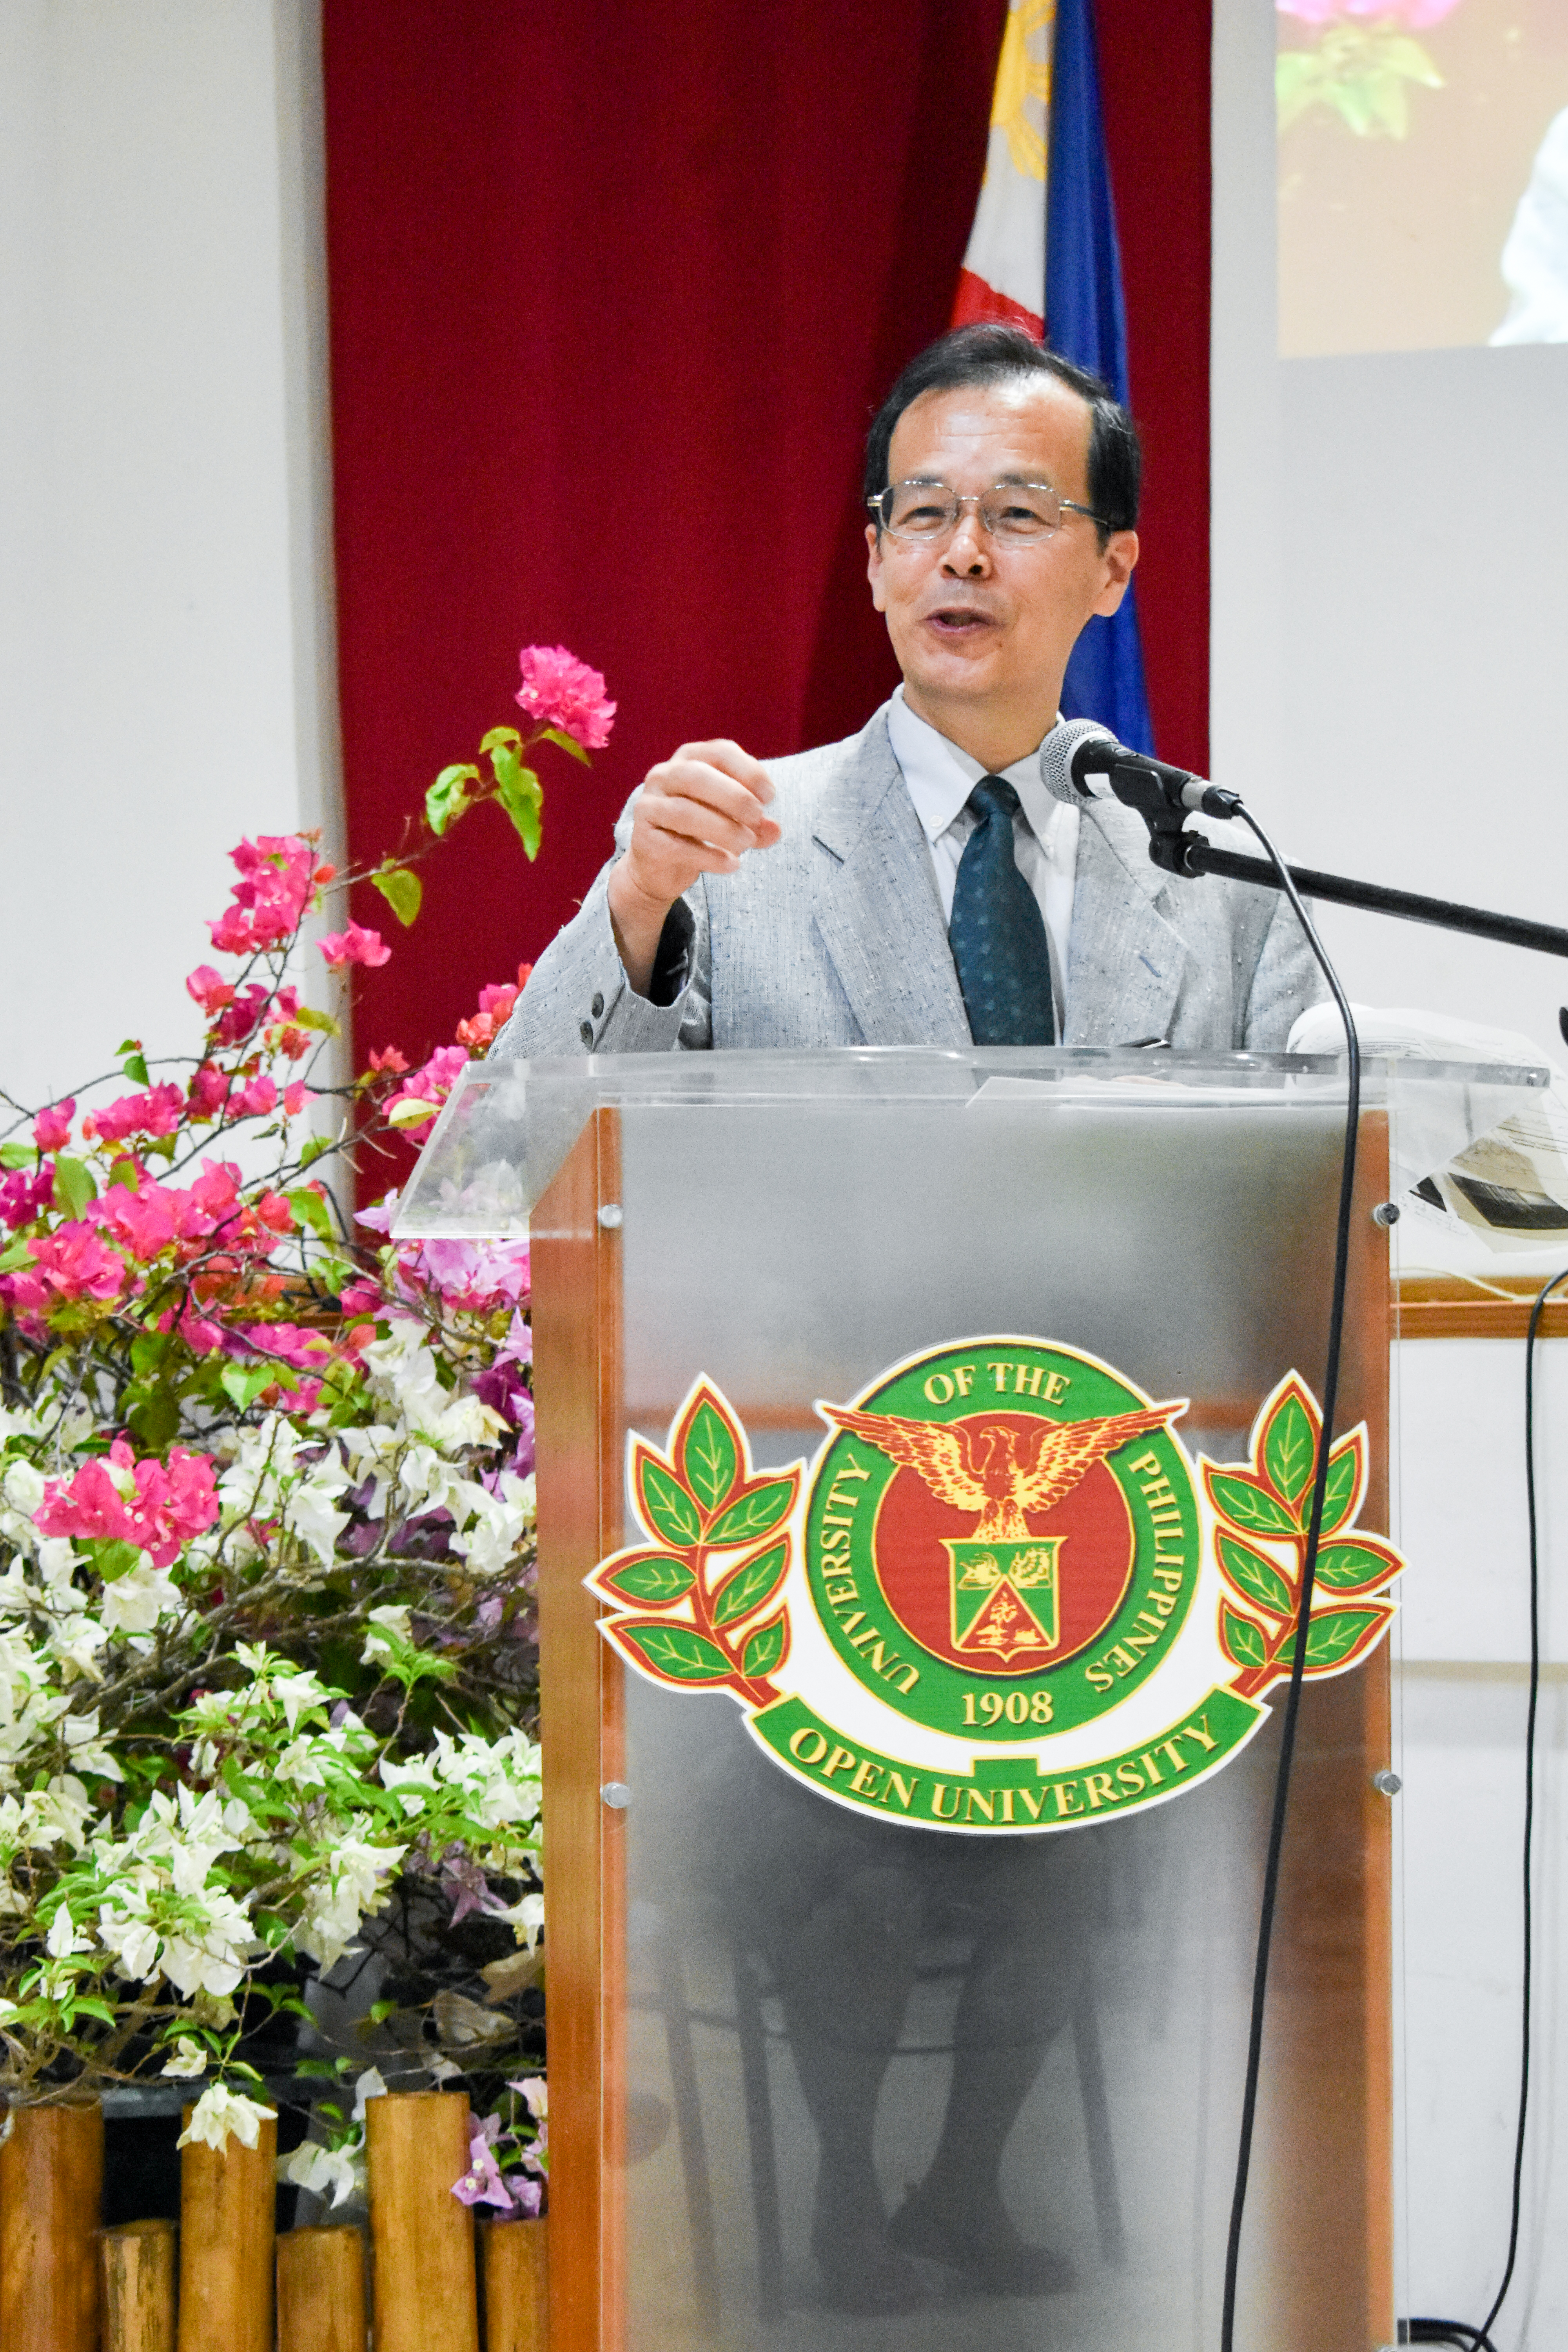 Prof. Tomoyuki Kobara discusses Japan perspectives on Social Studies as citizenship education.